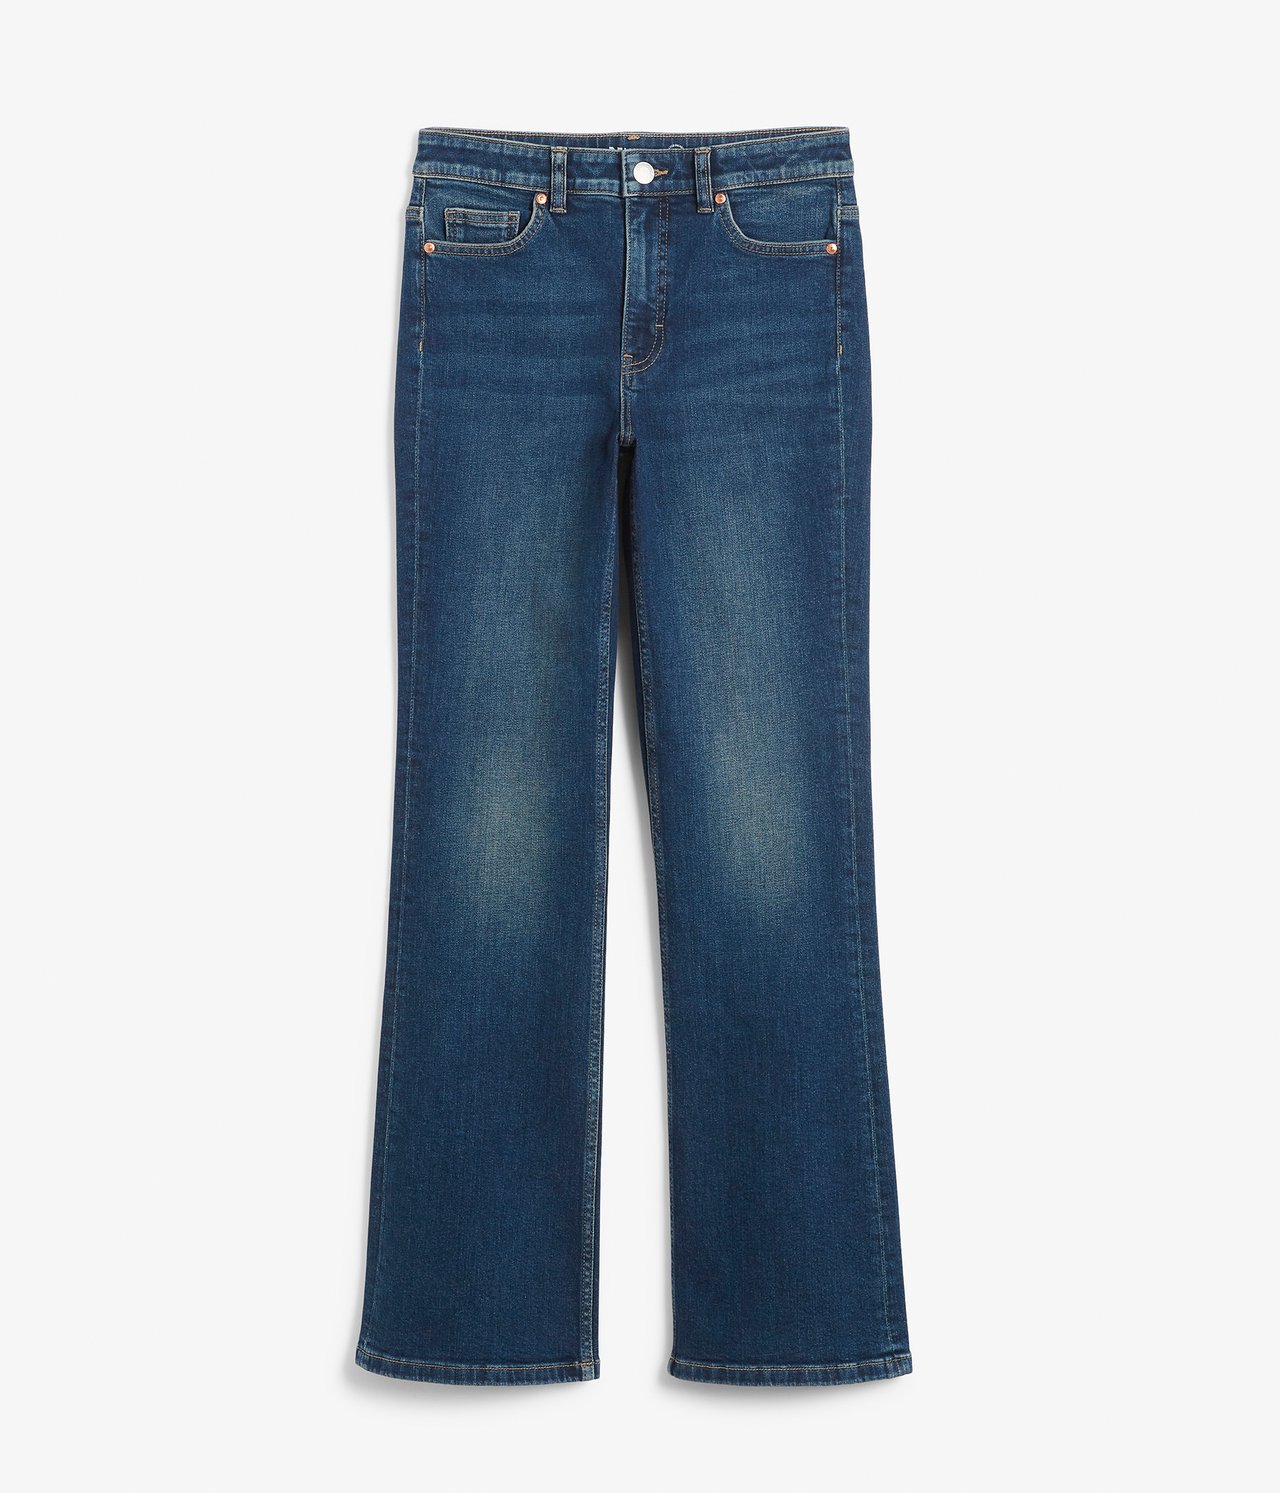 Flare jeans regular waist - Tumma denimi - 6